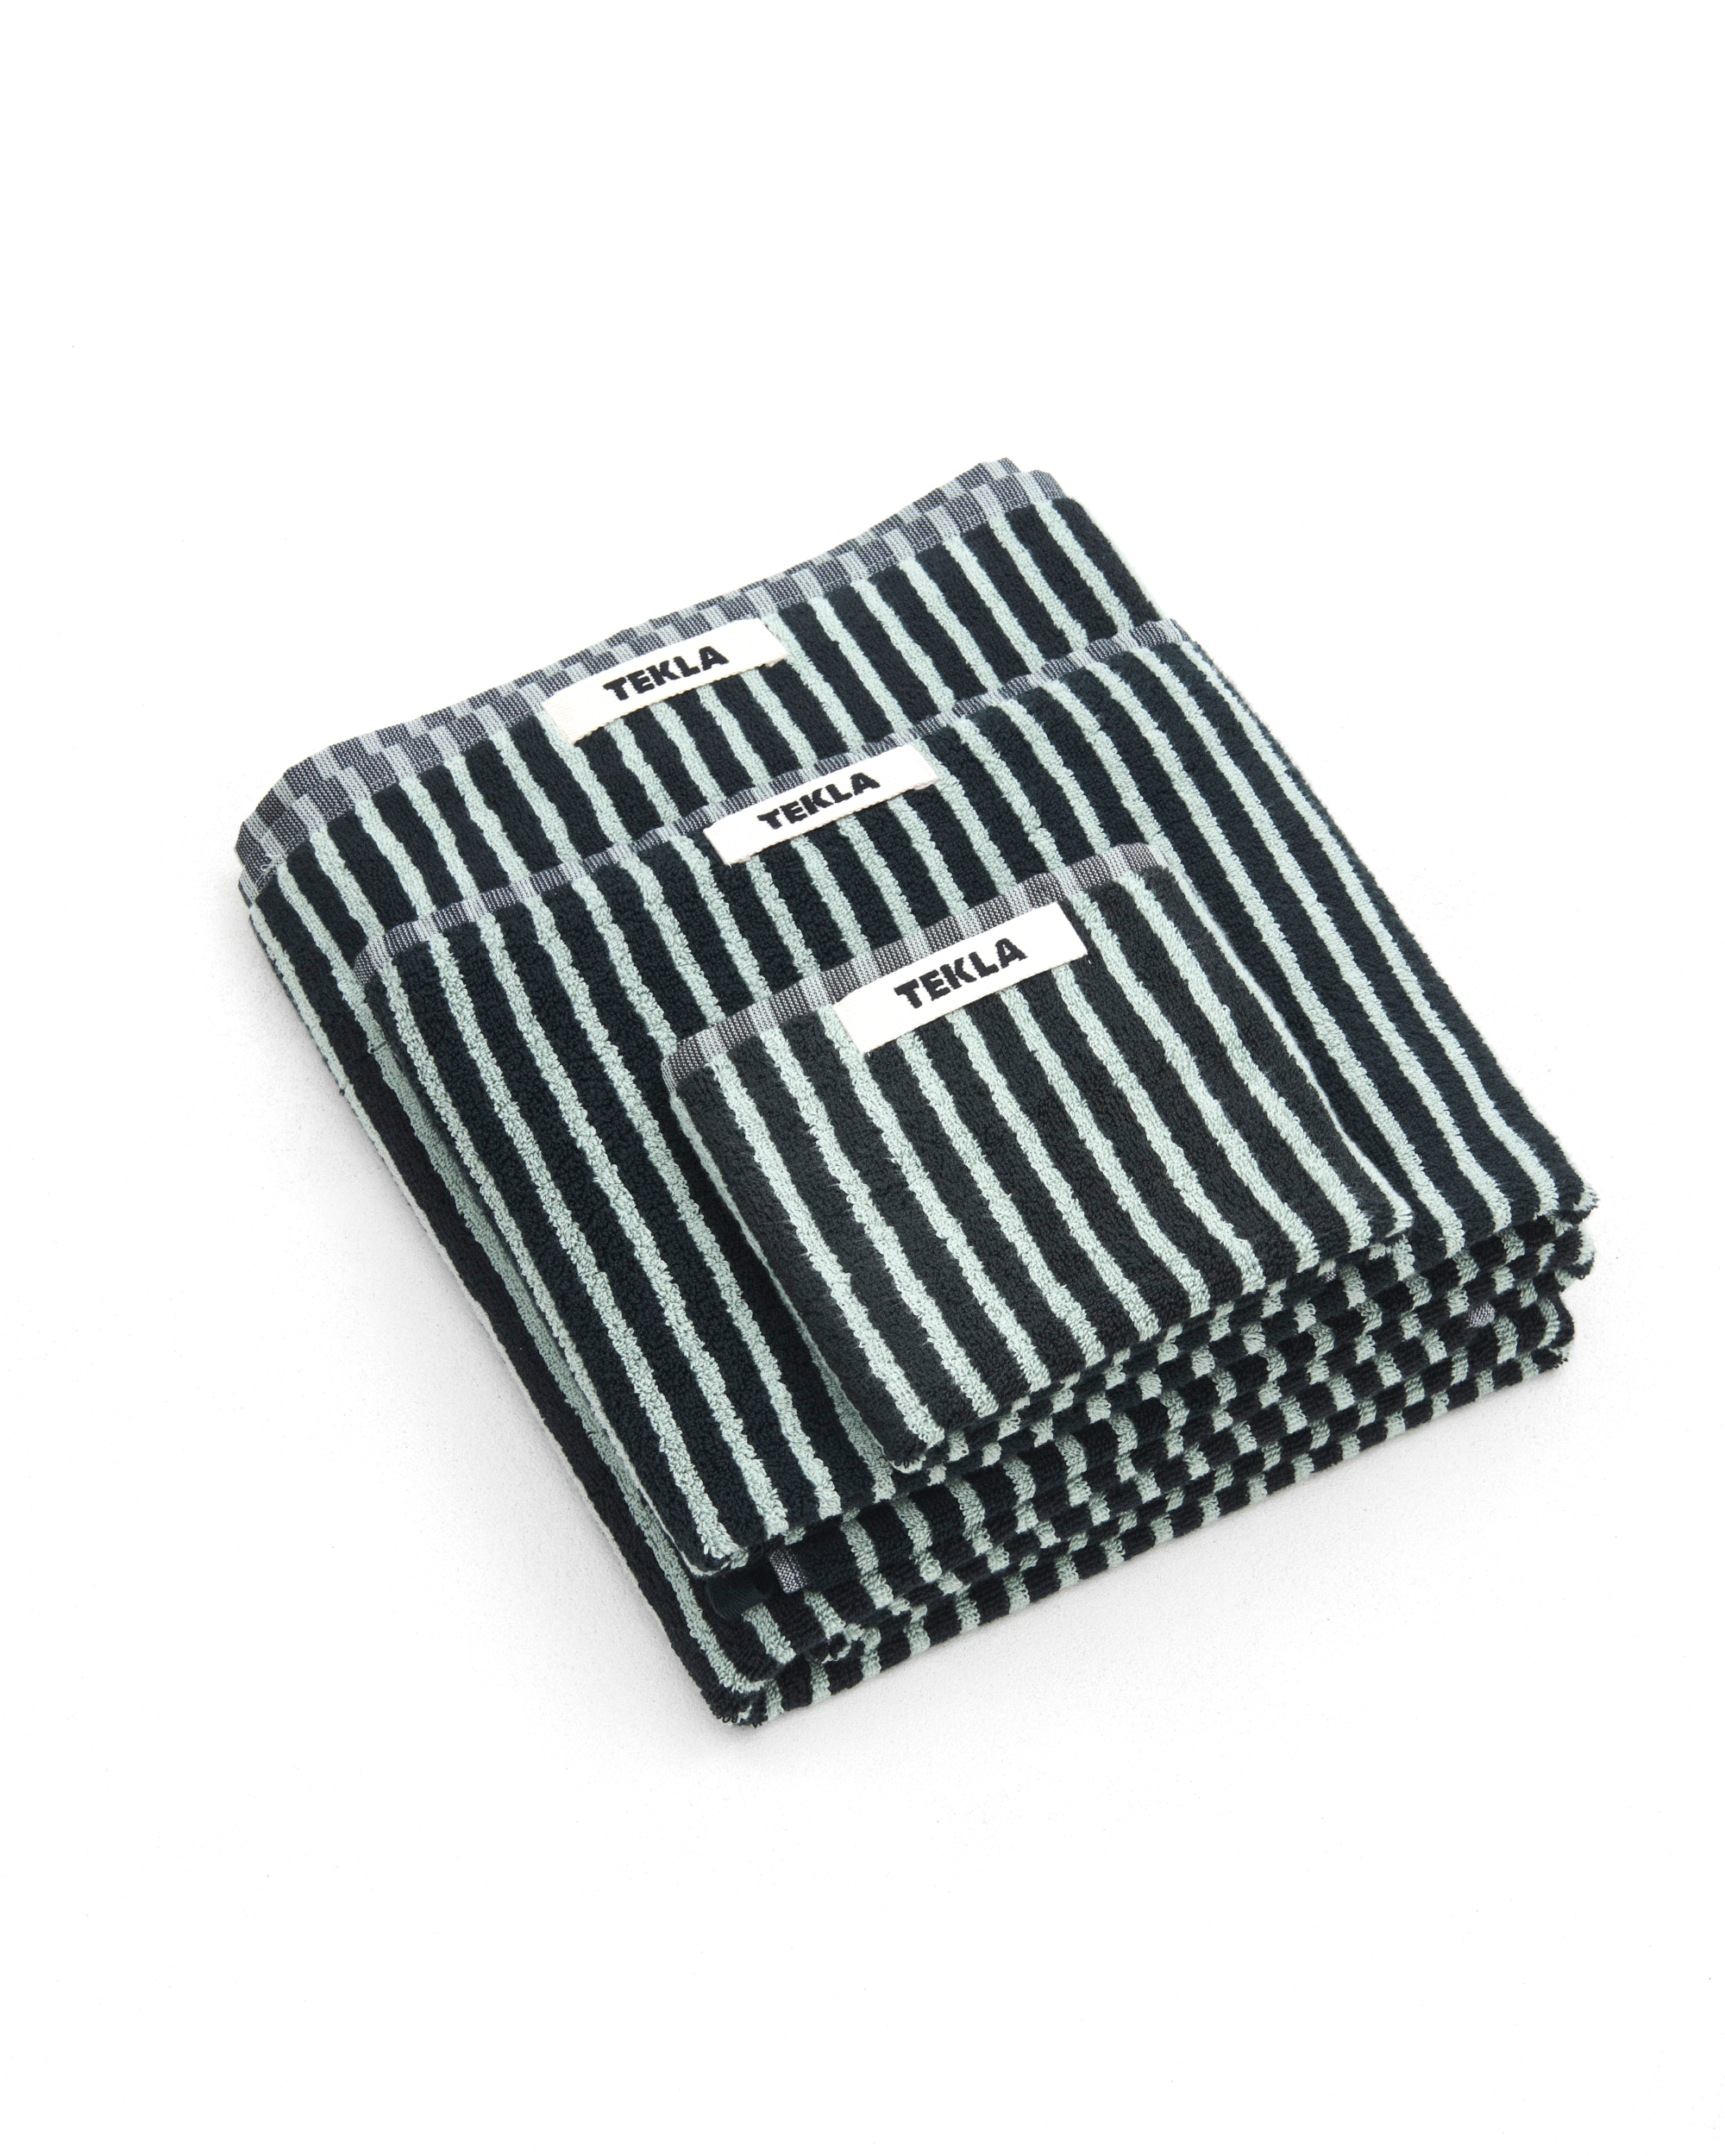 Washcloth (Striped) - Black / Mint